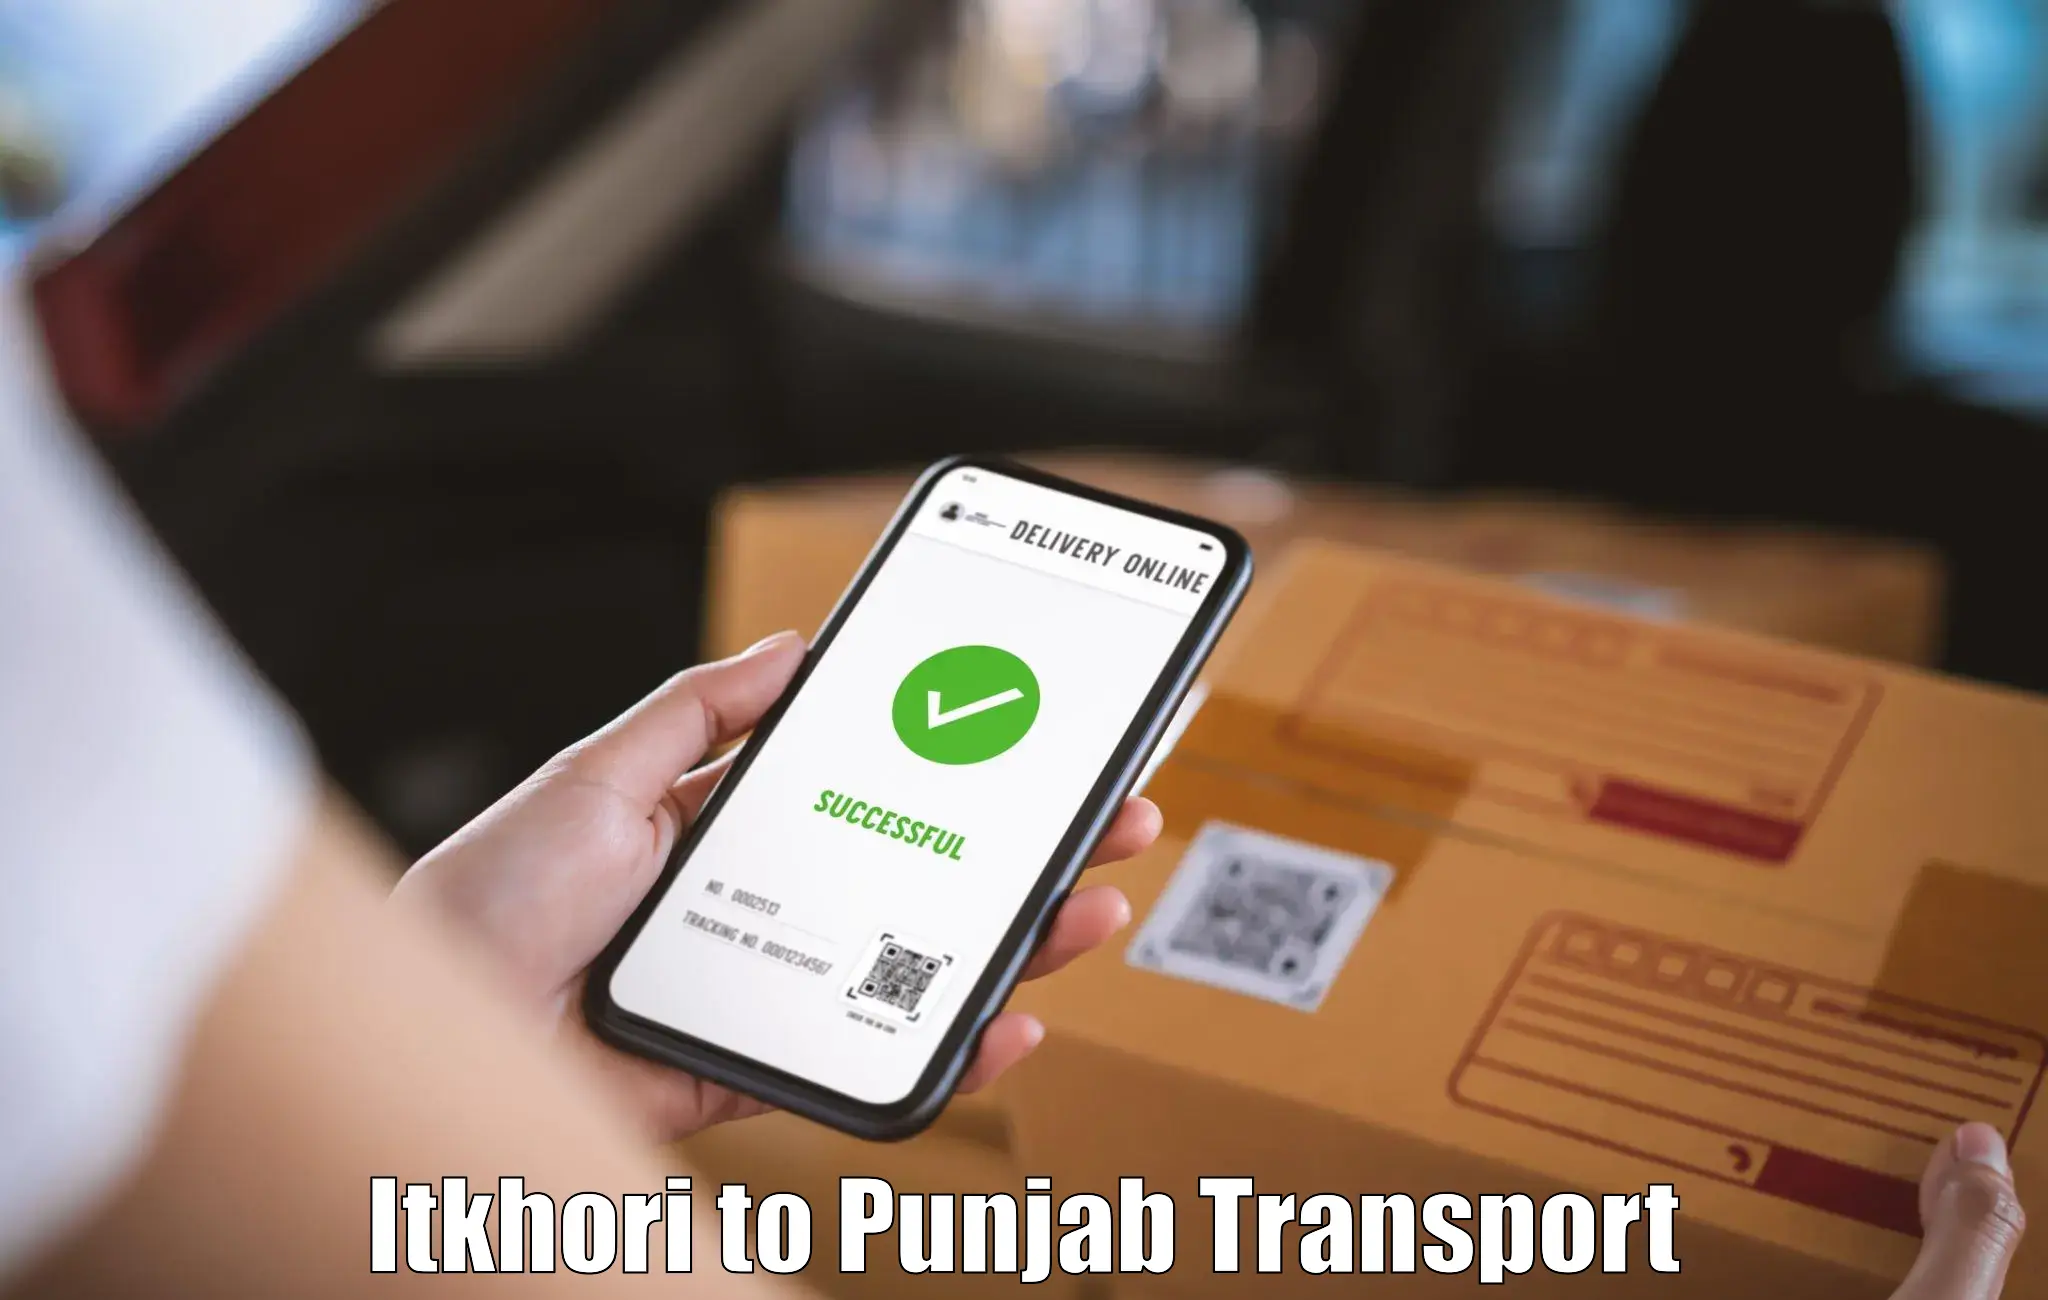 Nationwide transport services Itkhori to Ludhiana